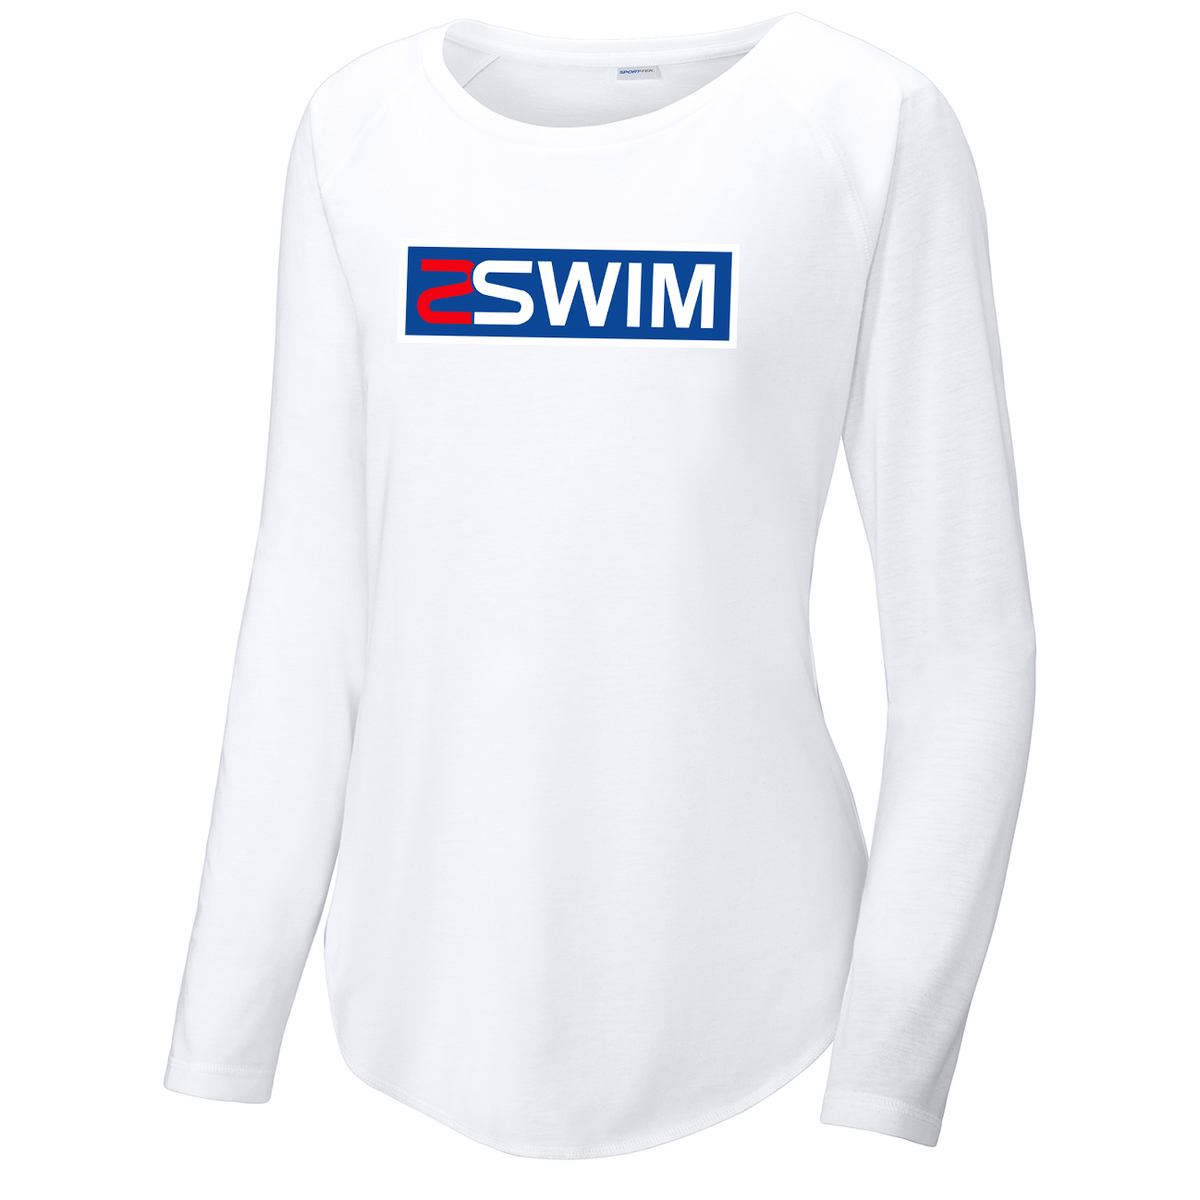 Skudin Swim Women's Raglan Long Sleeve CottonTouch